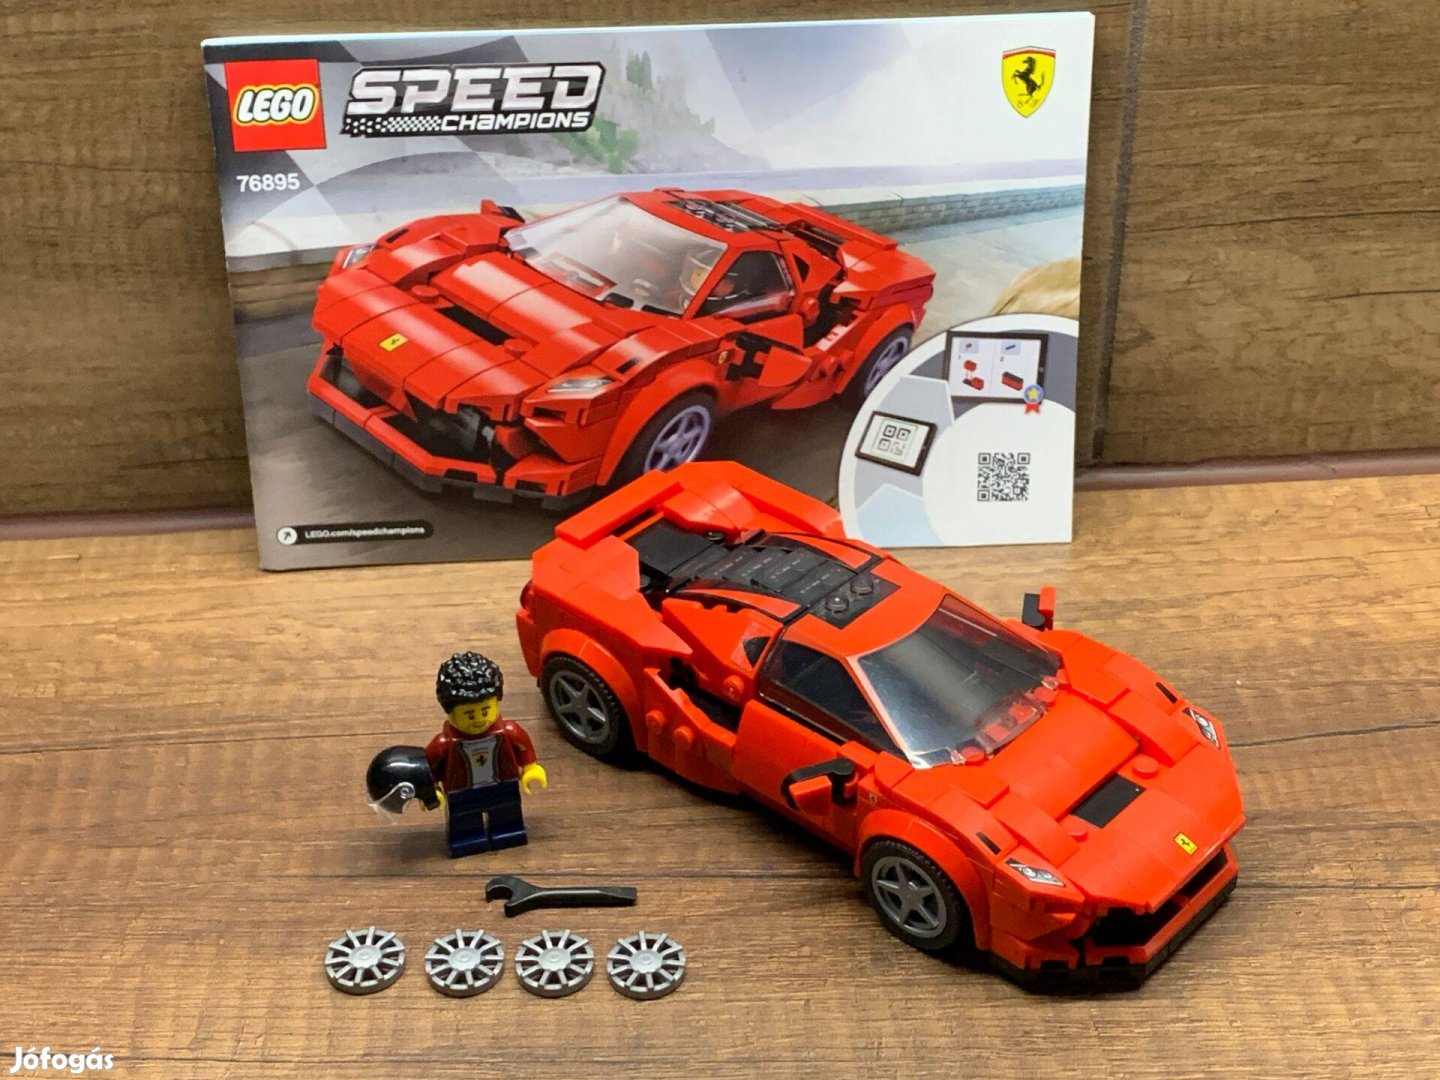 LEGO Speed Champions - Ferrari F8 Tributo (76895)